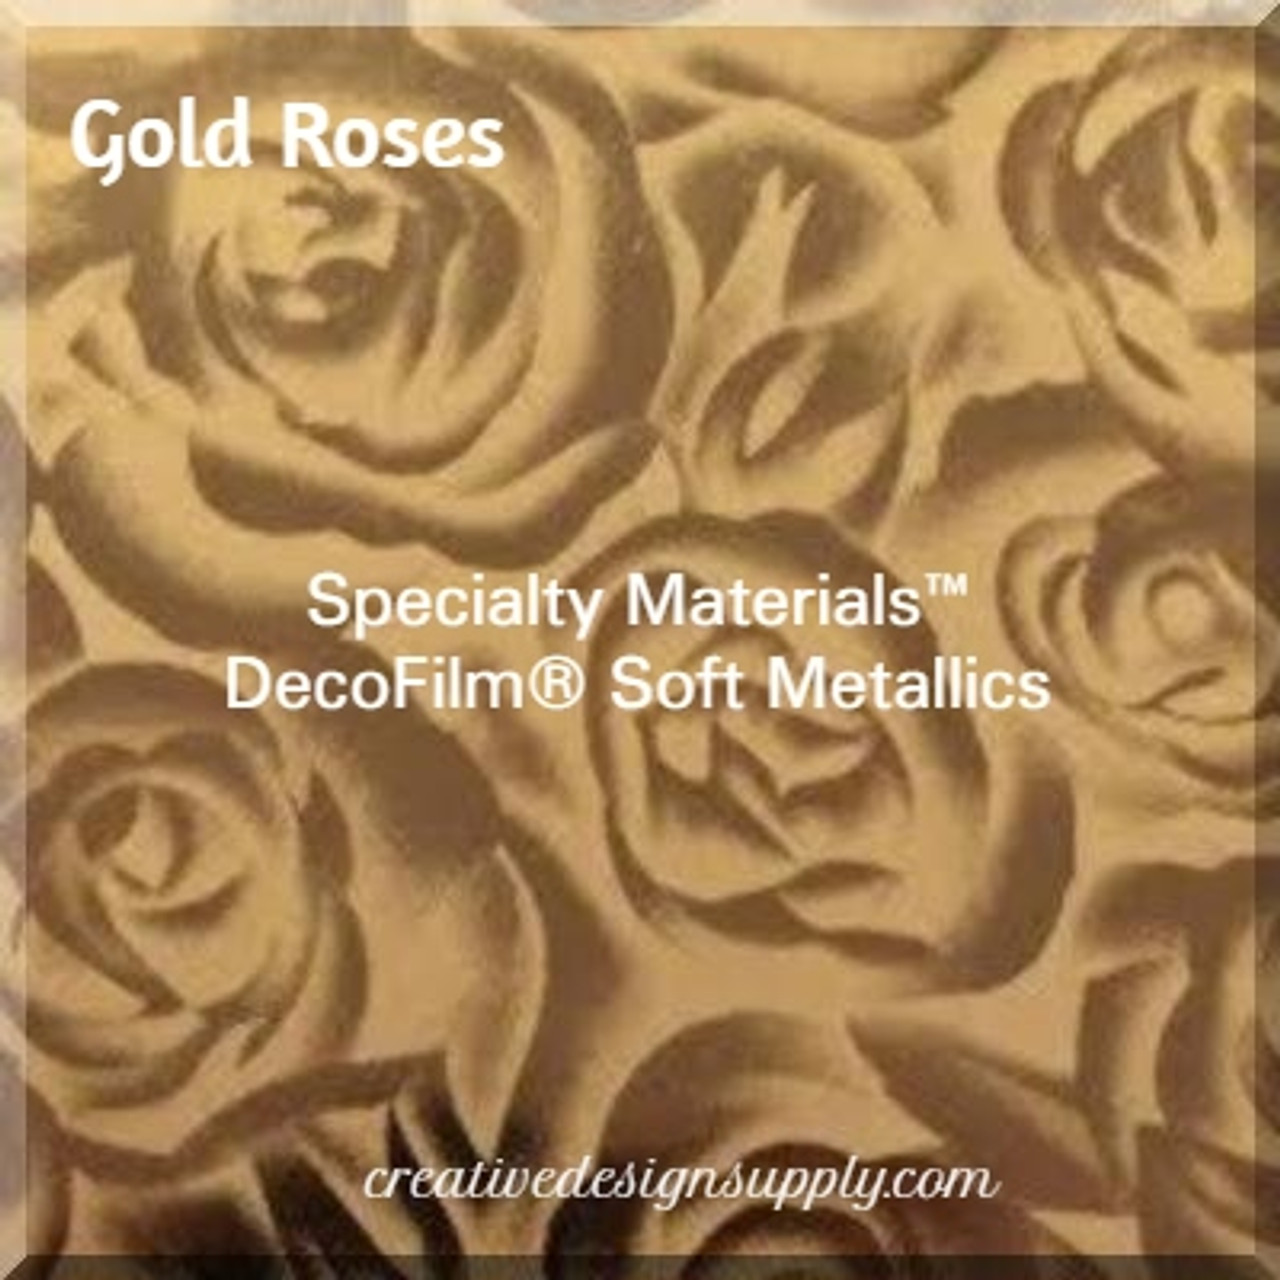 DecoFilm® Soft Metallics Gold Roses